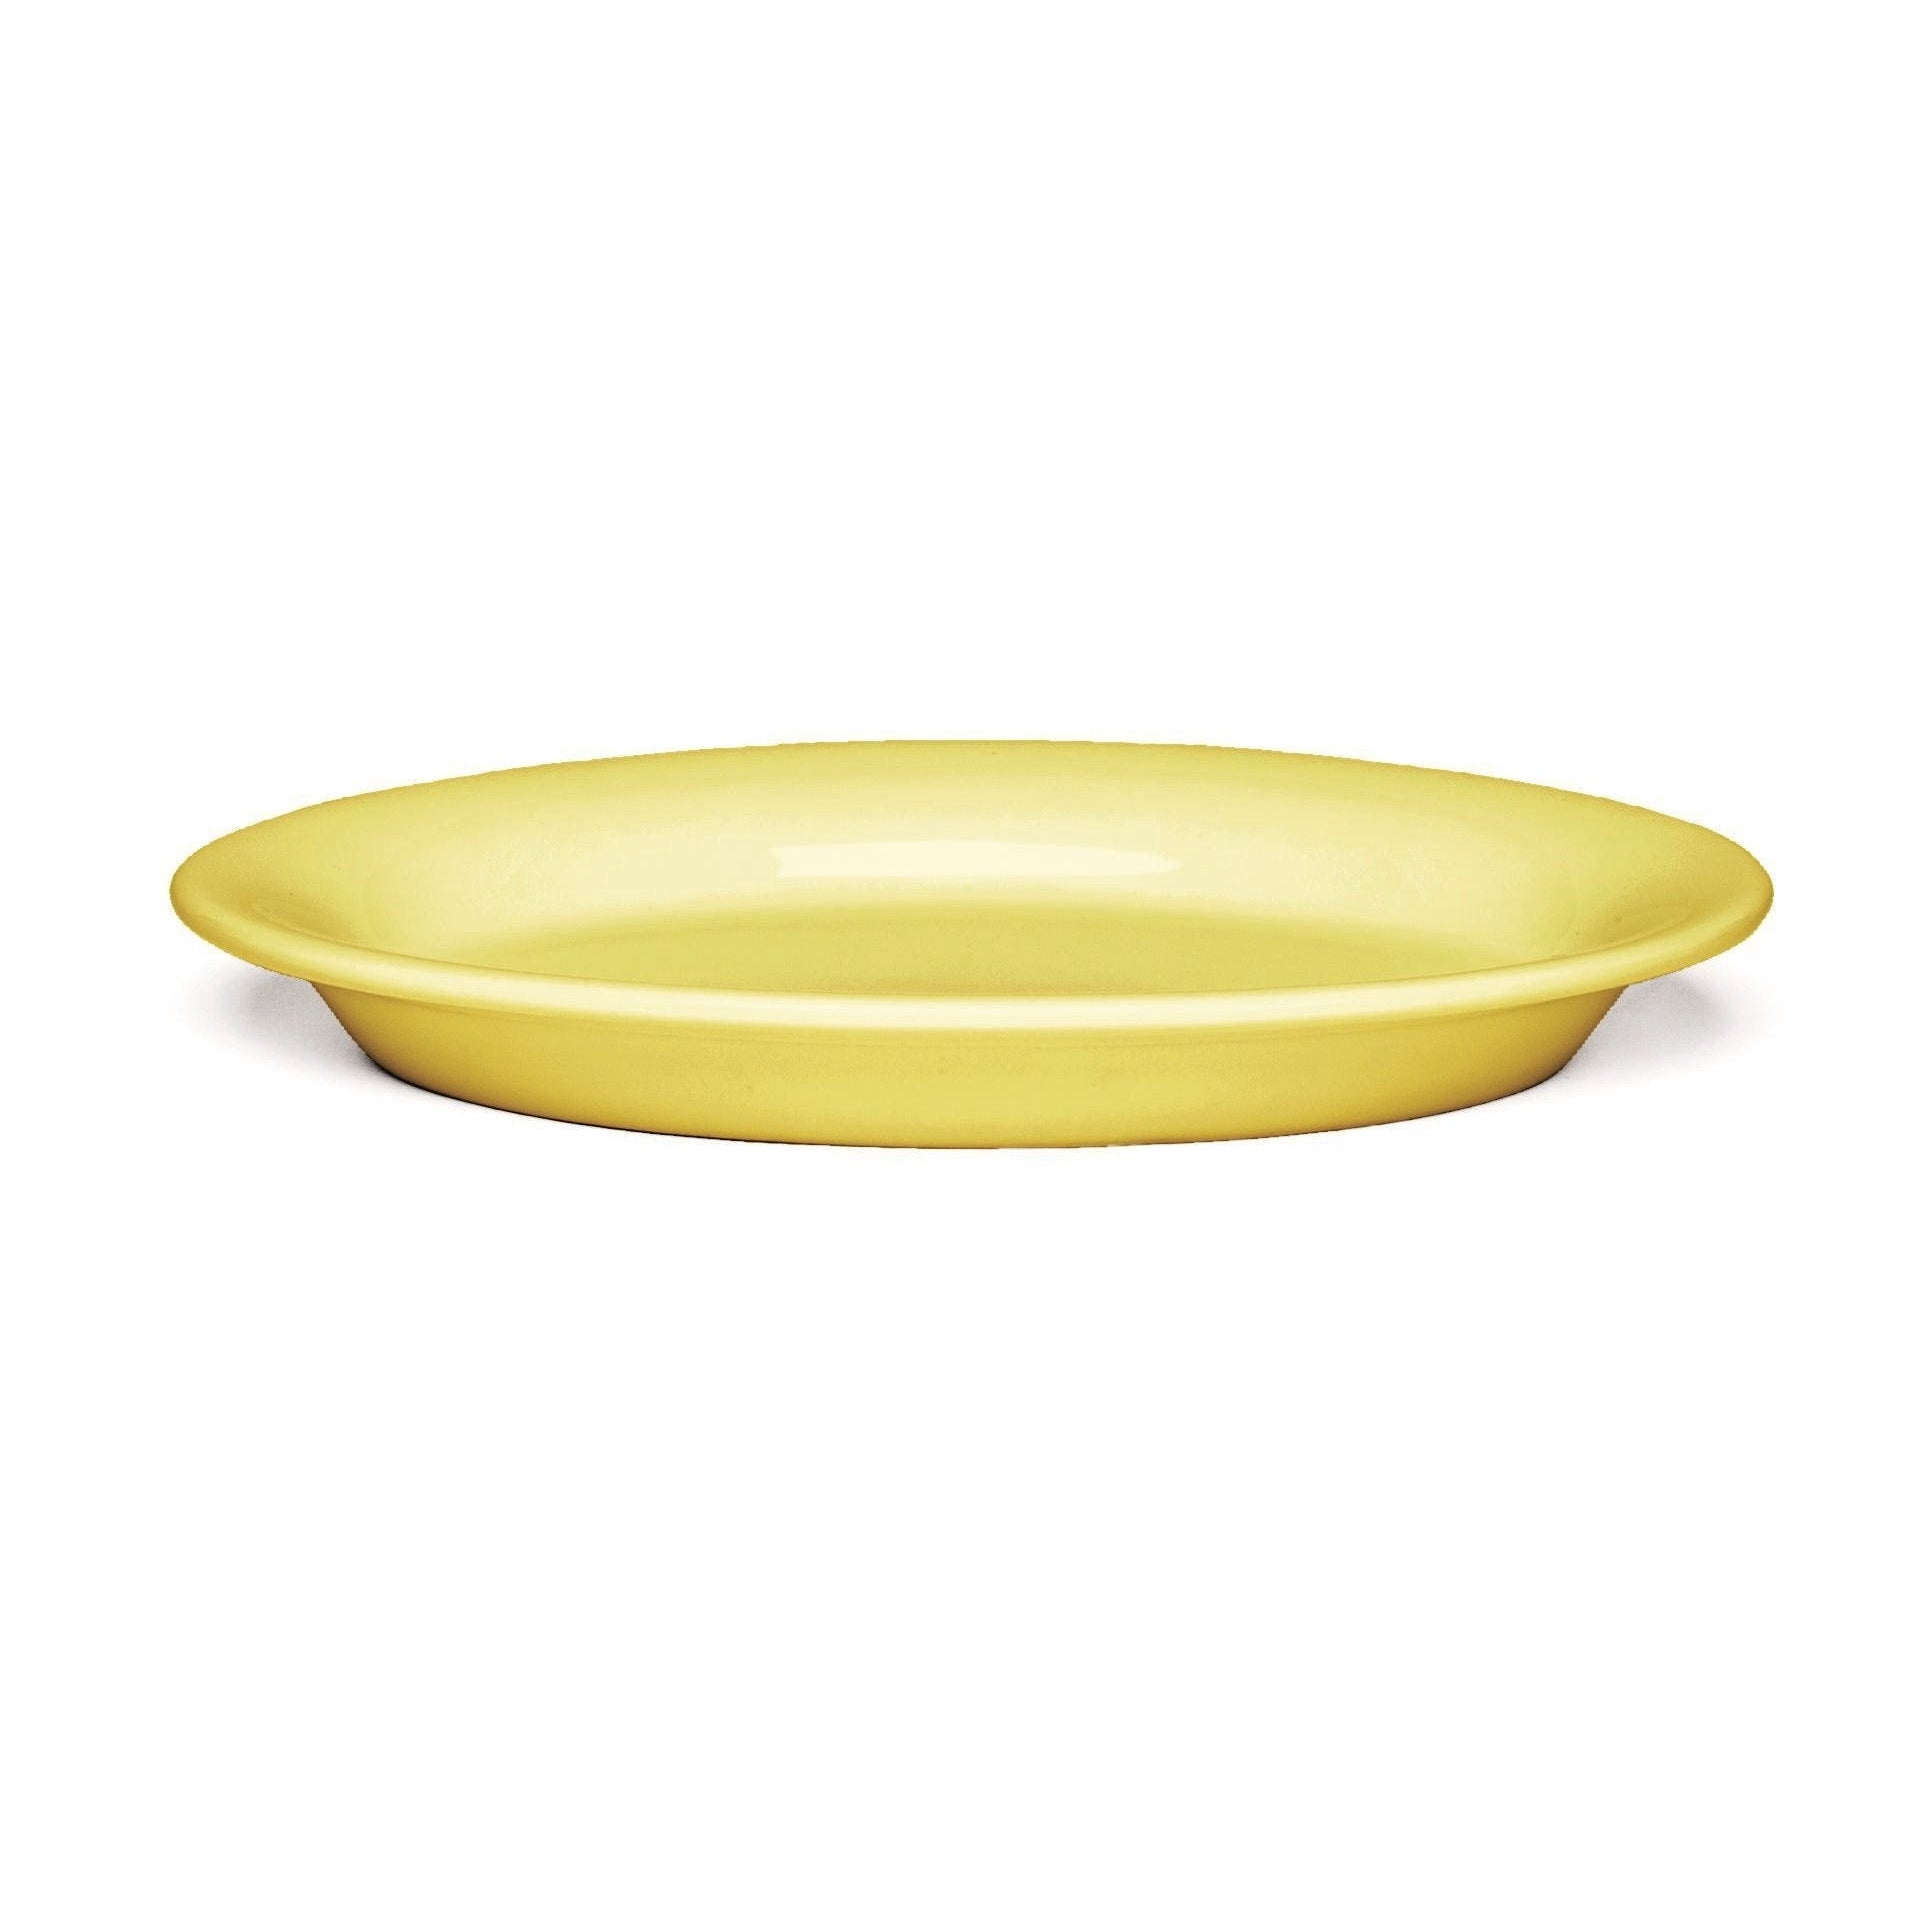 Kähler Ursula Plate Yellow, ø22 Cm